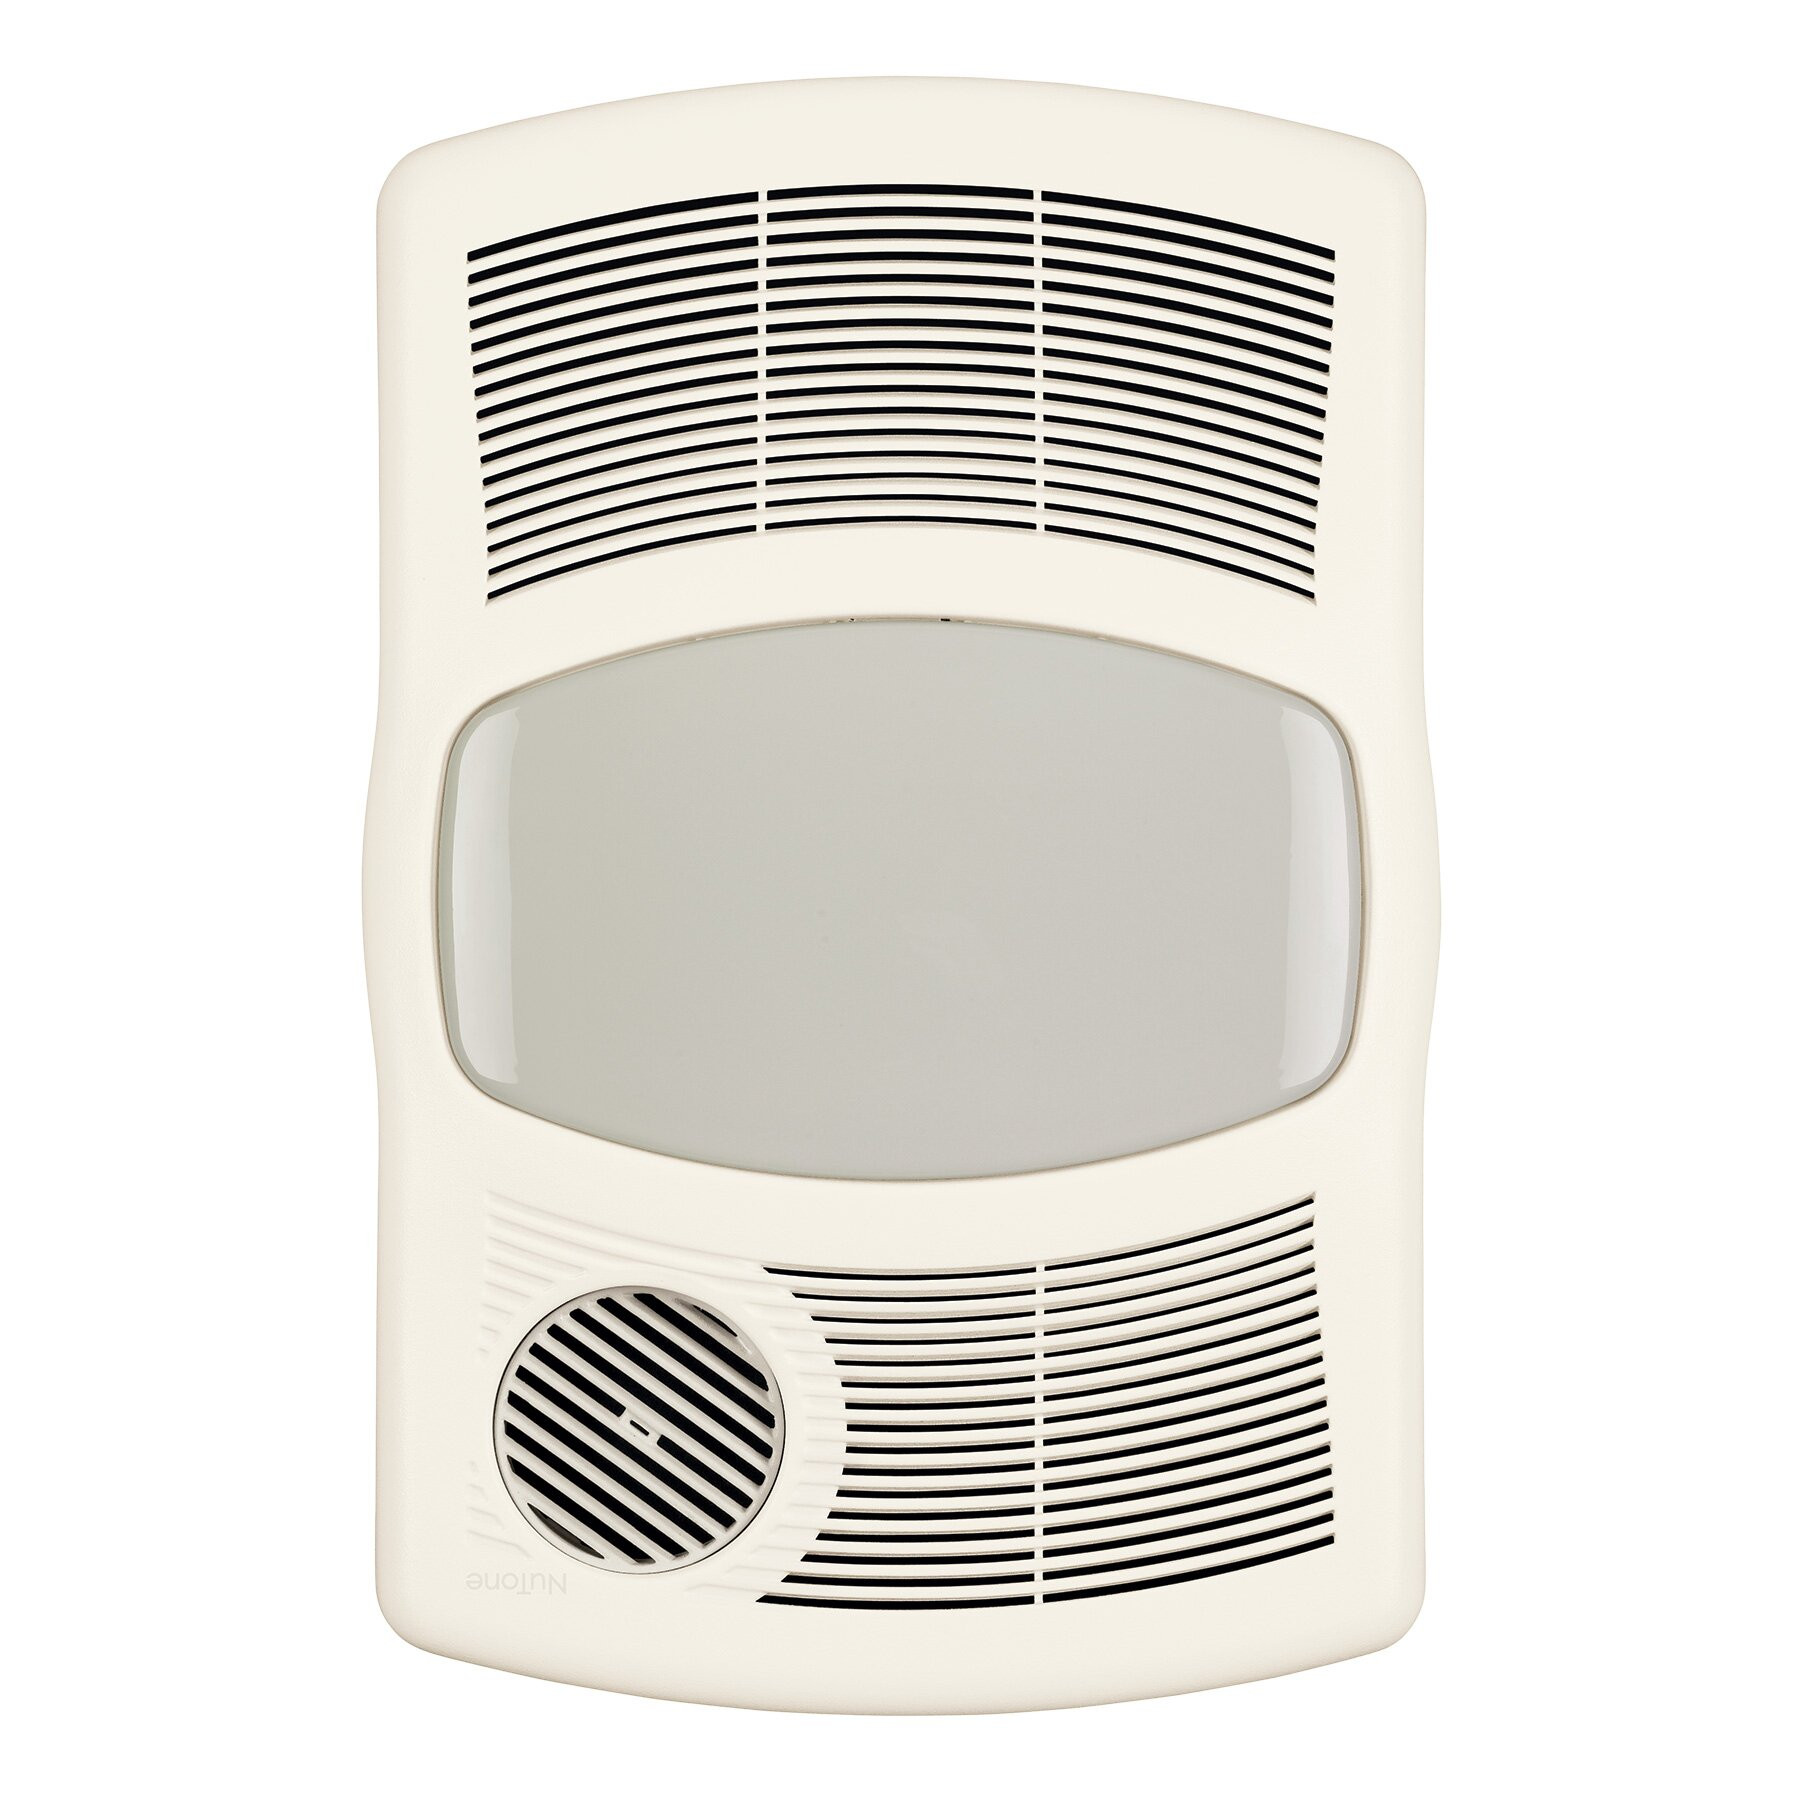 Bathroom Exhaust Fan With Heater
 Broan 100 CFM Exhaust Bathroom Fan with Heater & Reviews